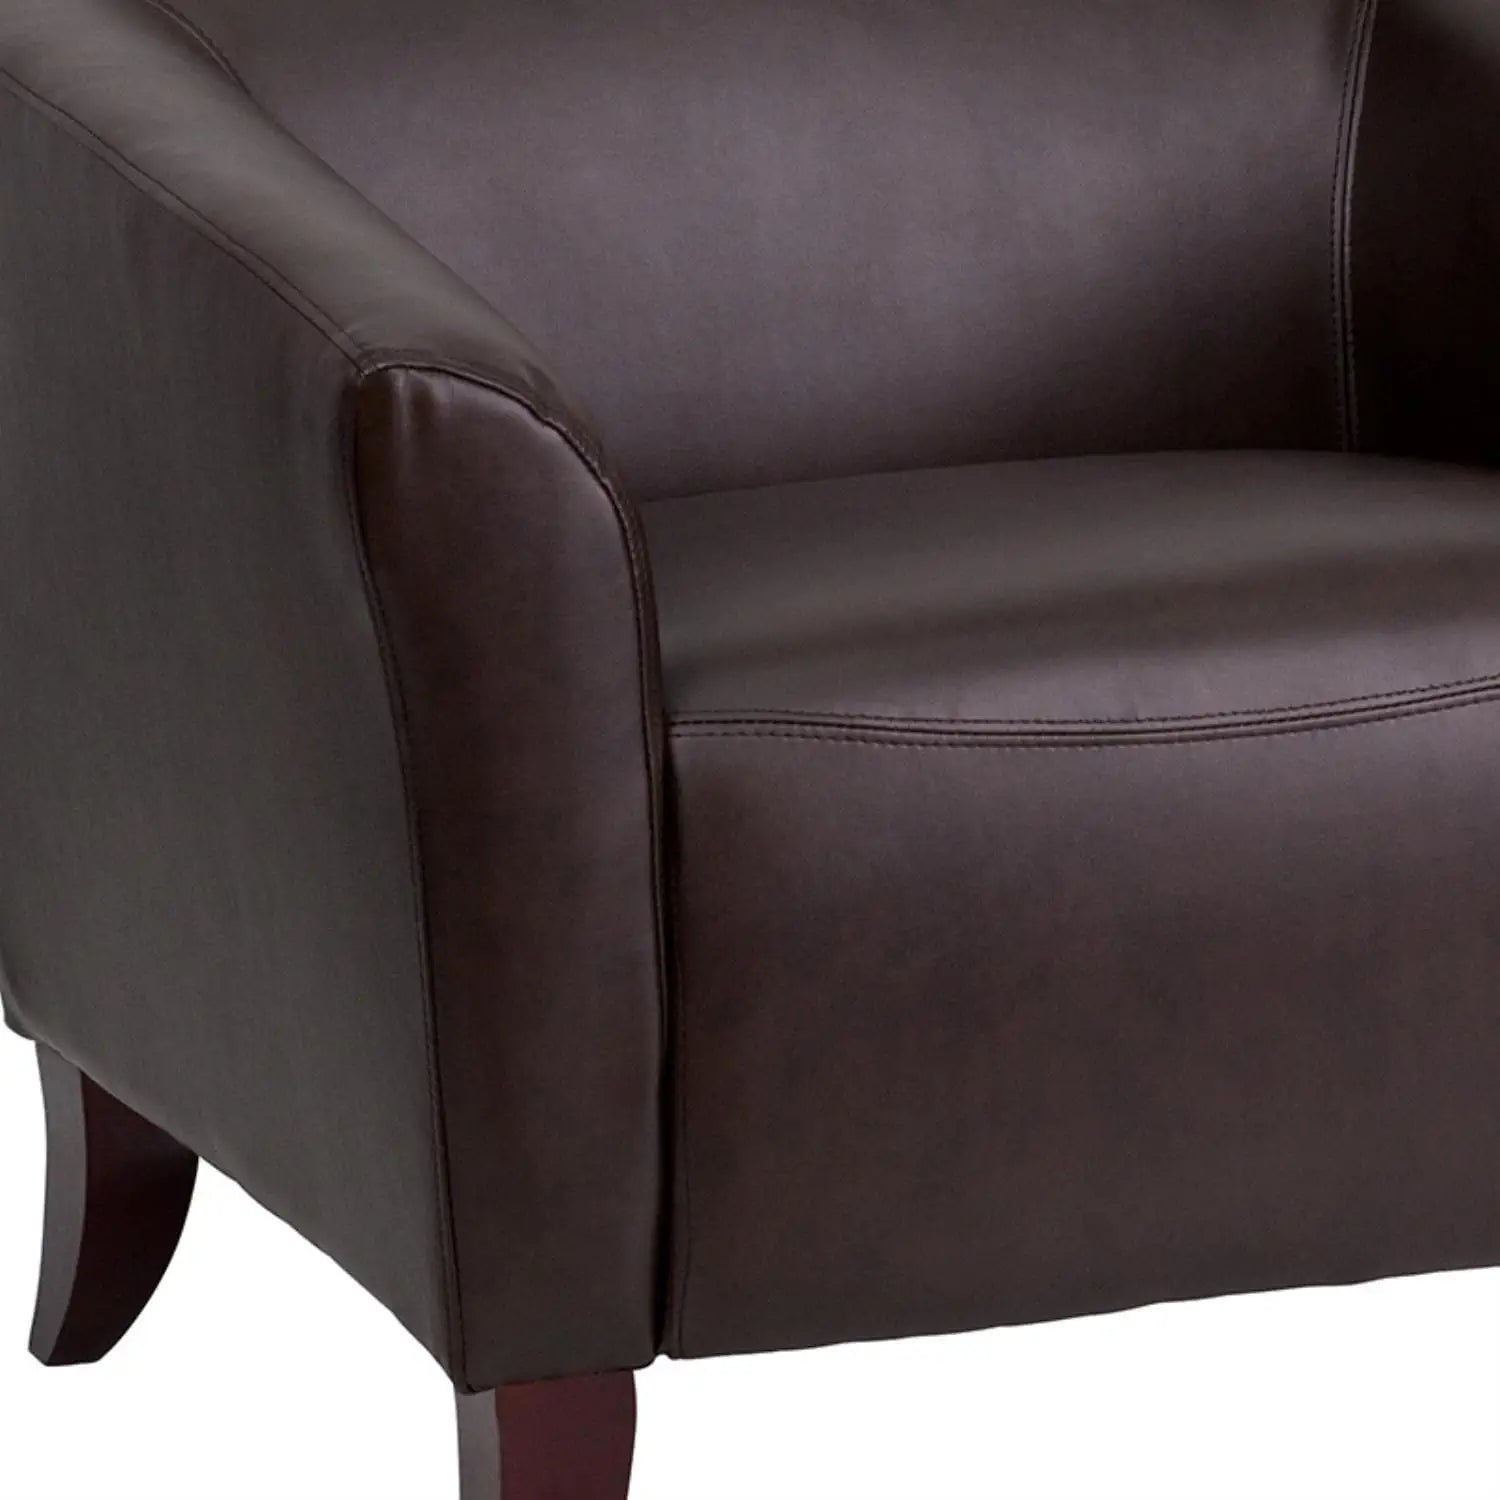 Flash Furniture HERCULES Imperial Series Brown LeatherSoft Loveseat